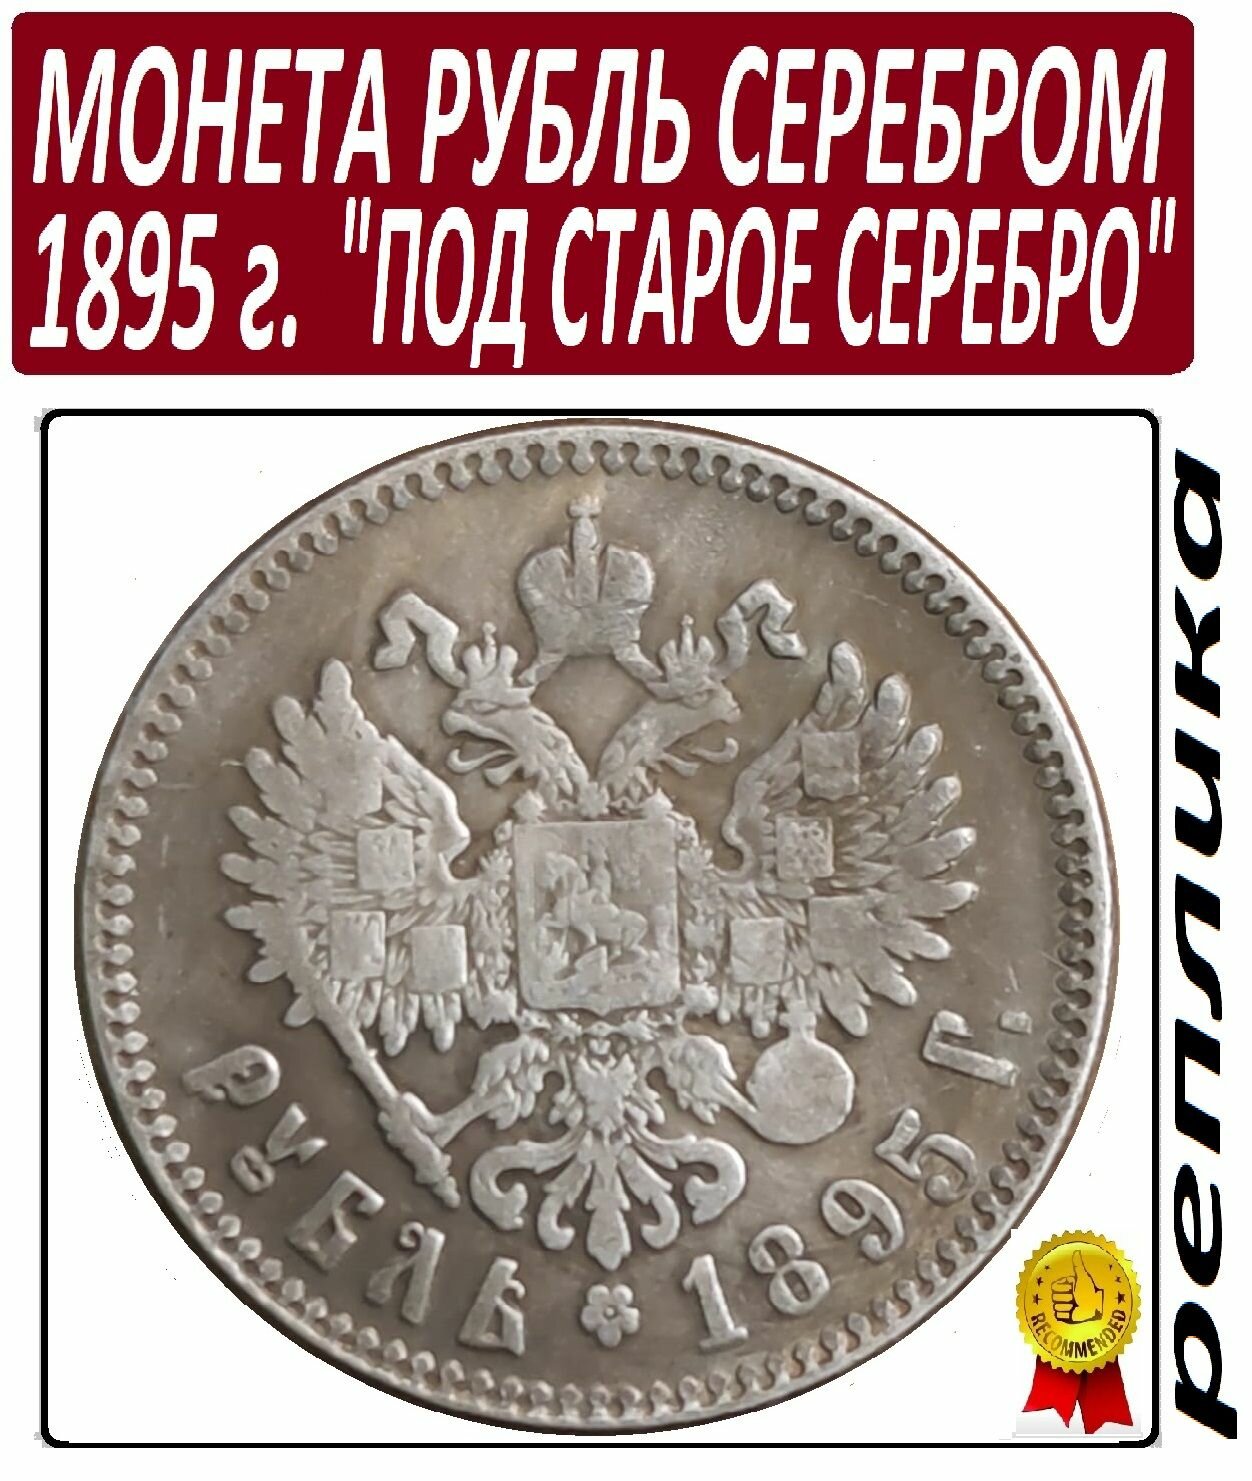 Монета 1 рубль серебром 1895 года, Николай 2 "под старое серебро"